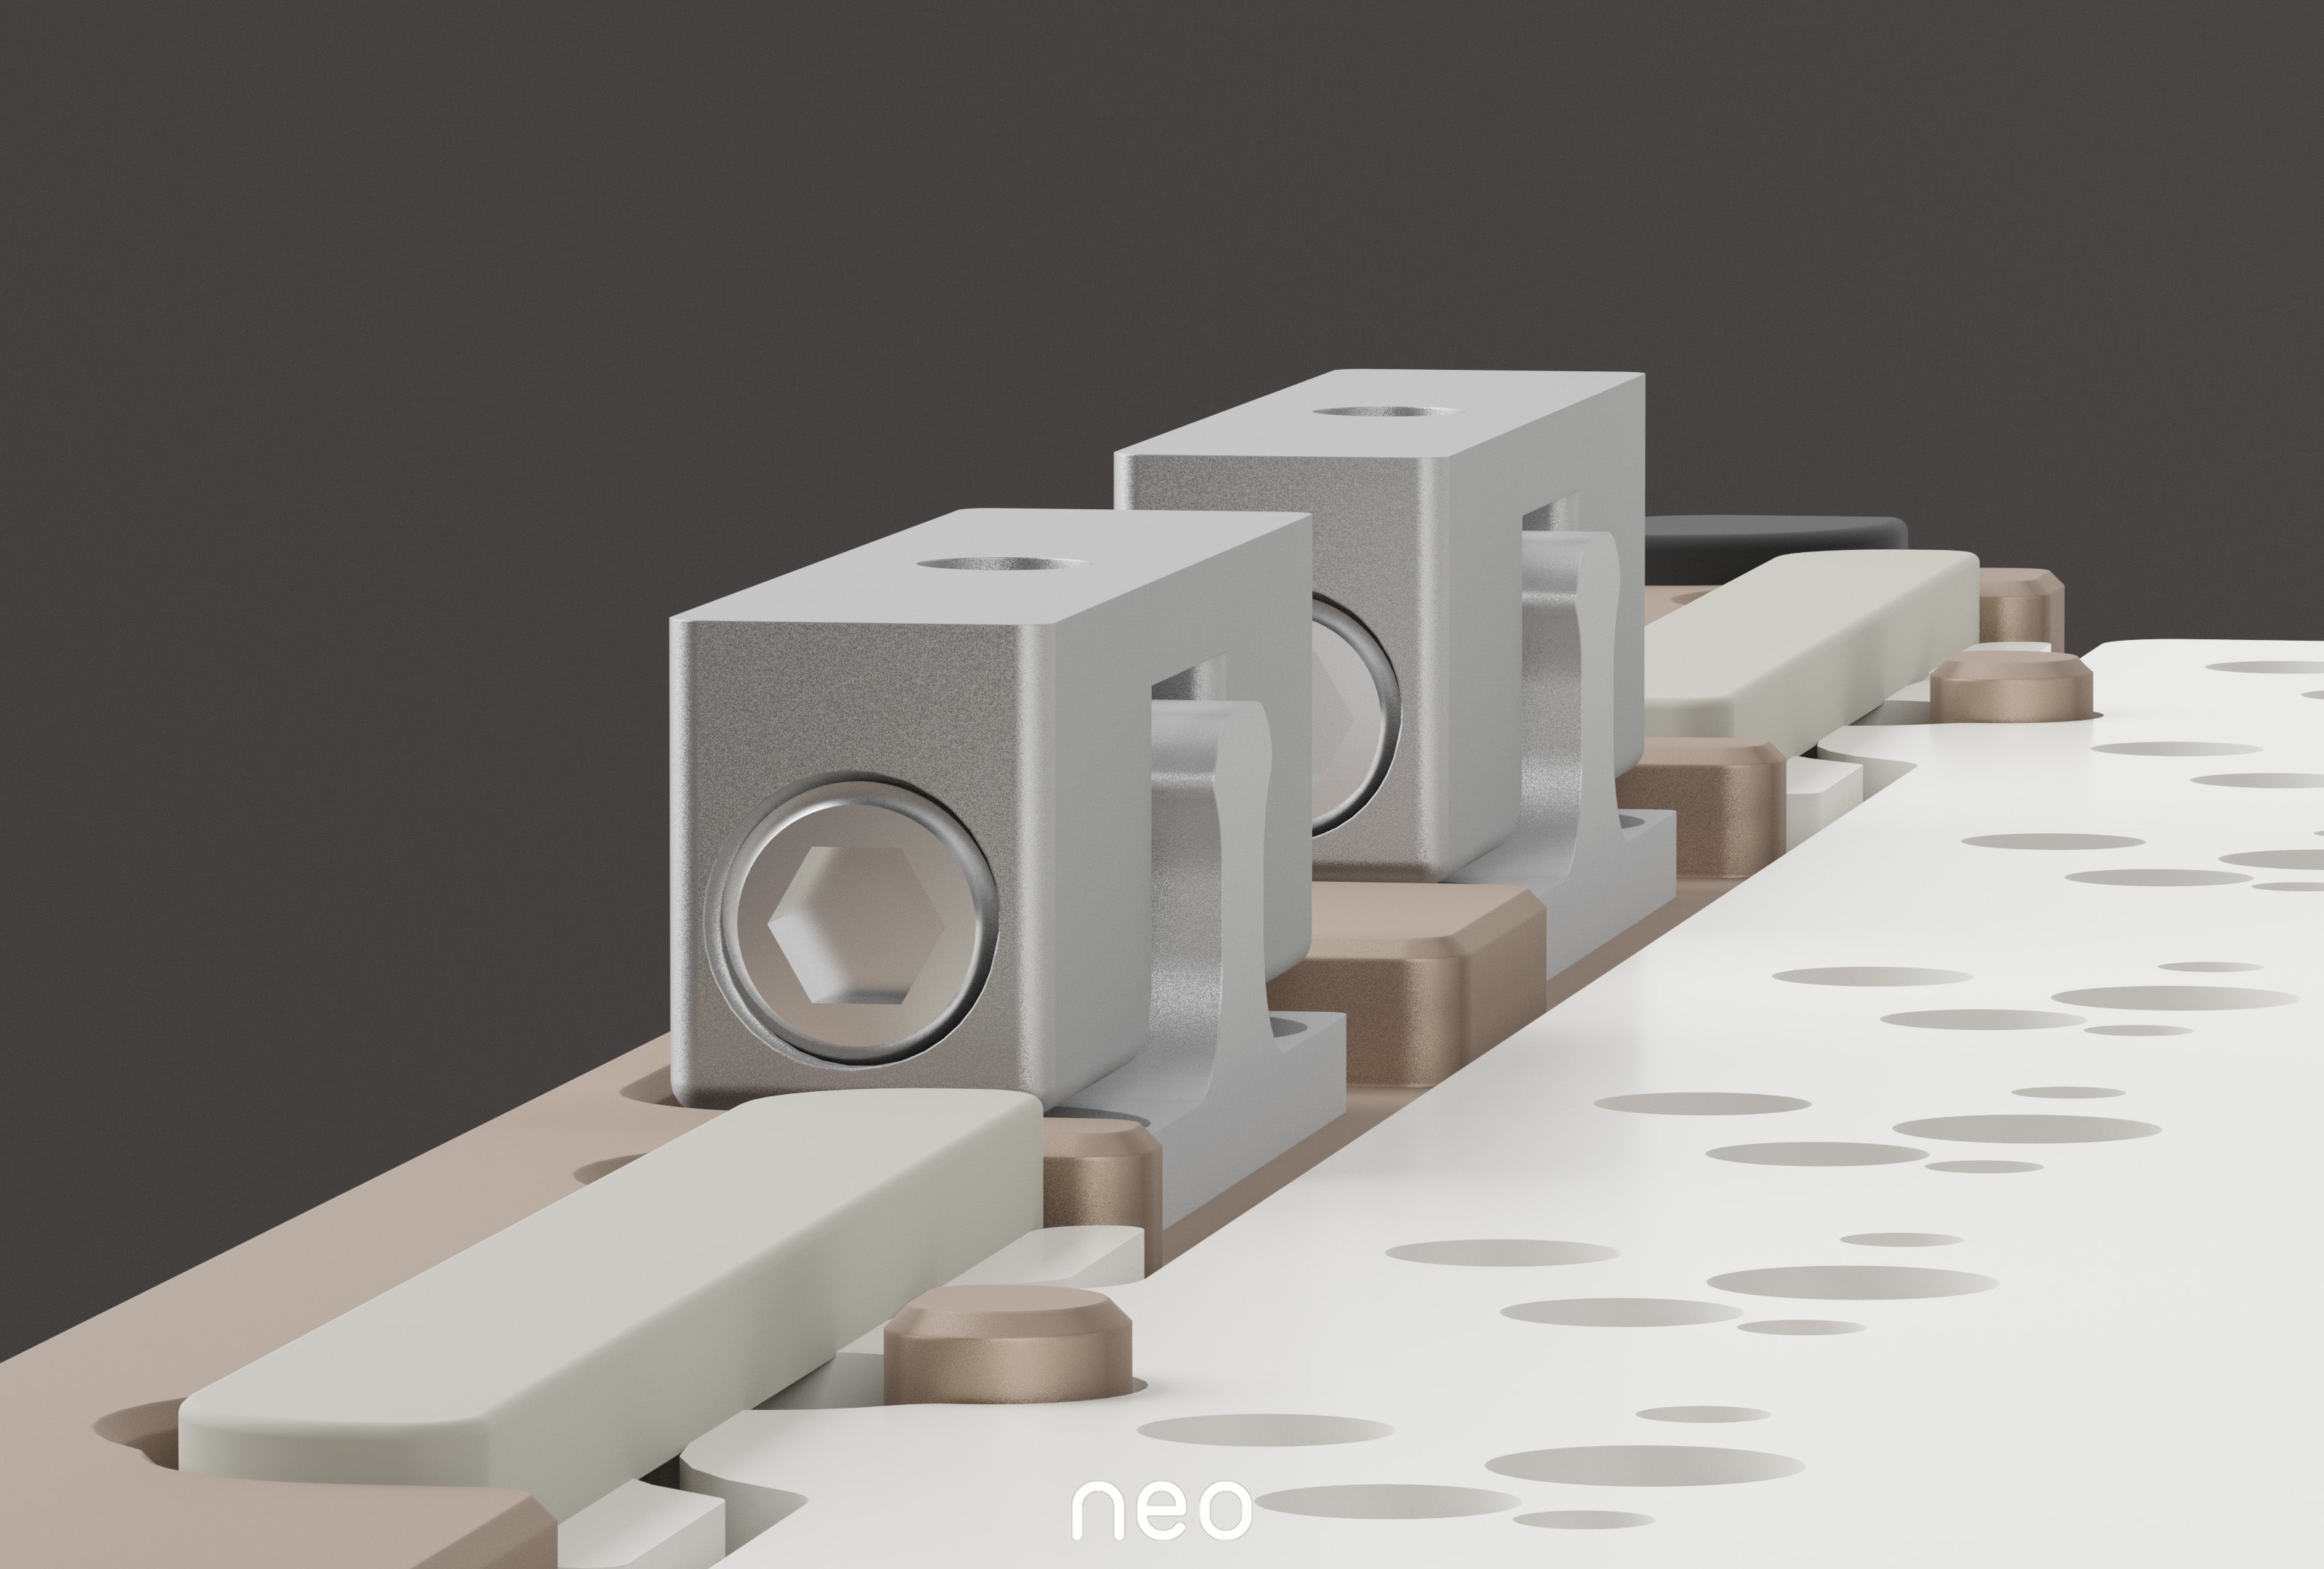 Neo80 April Batch - Pre-Order